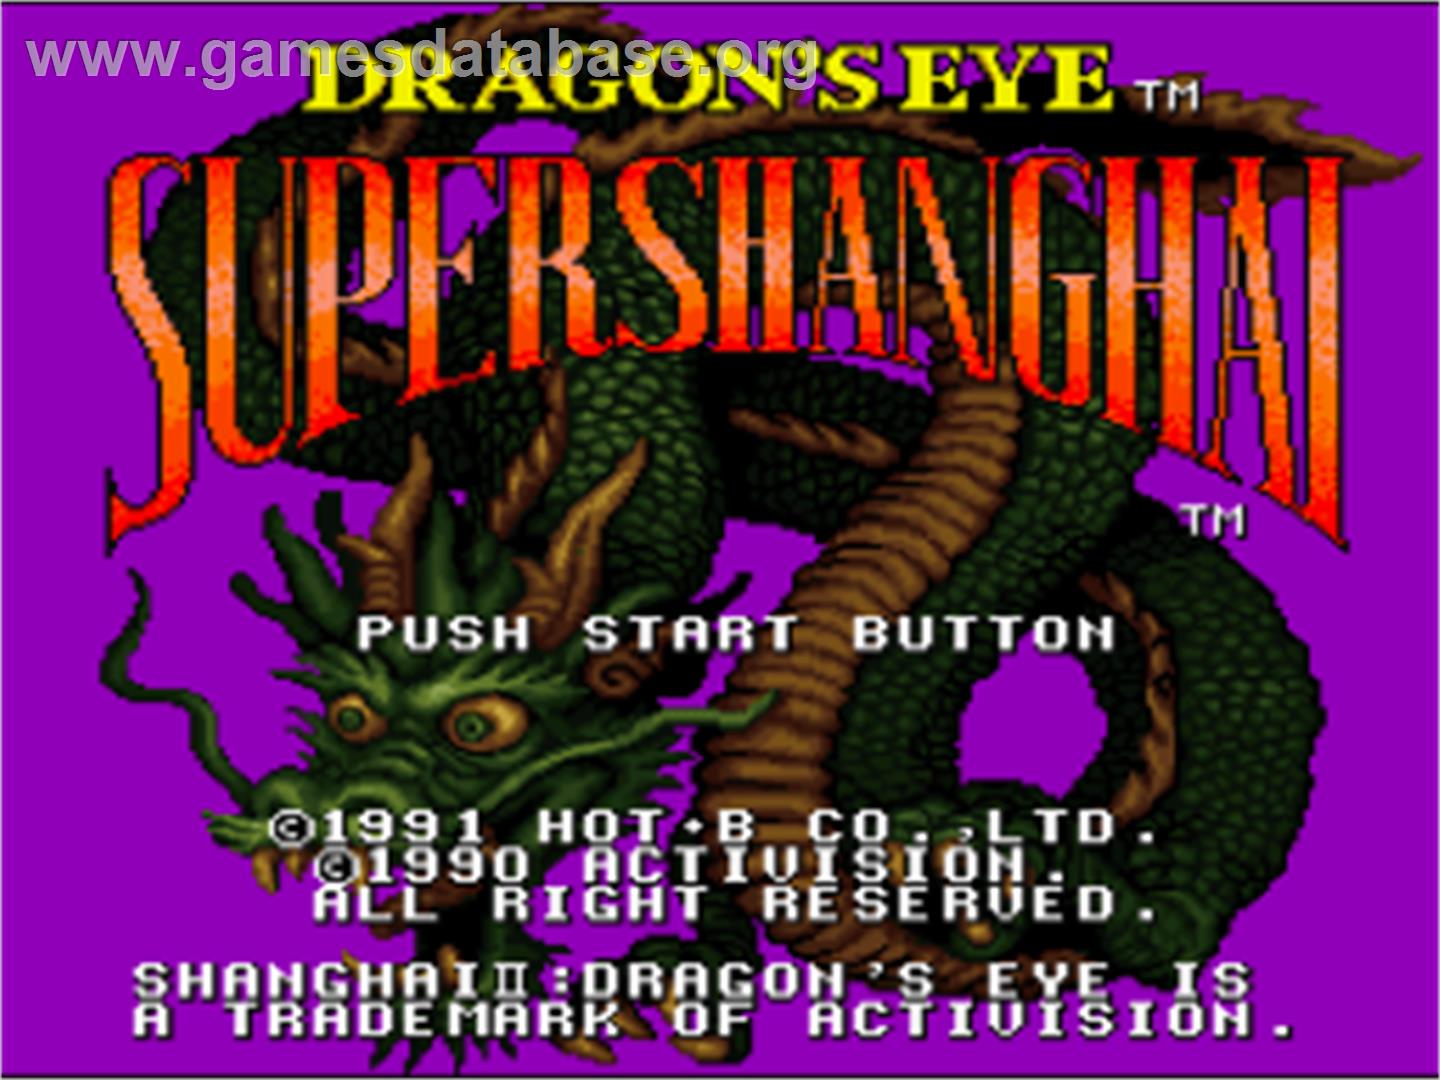 Shanghai II: Dragon's Eye - Nintendo SNES - Artwork - Title Screen